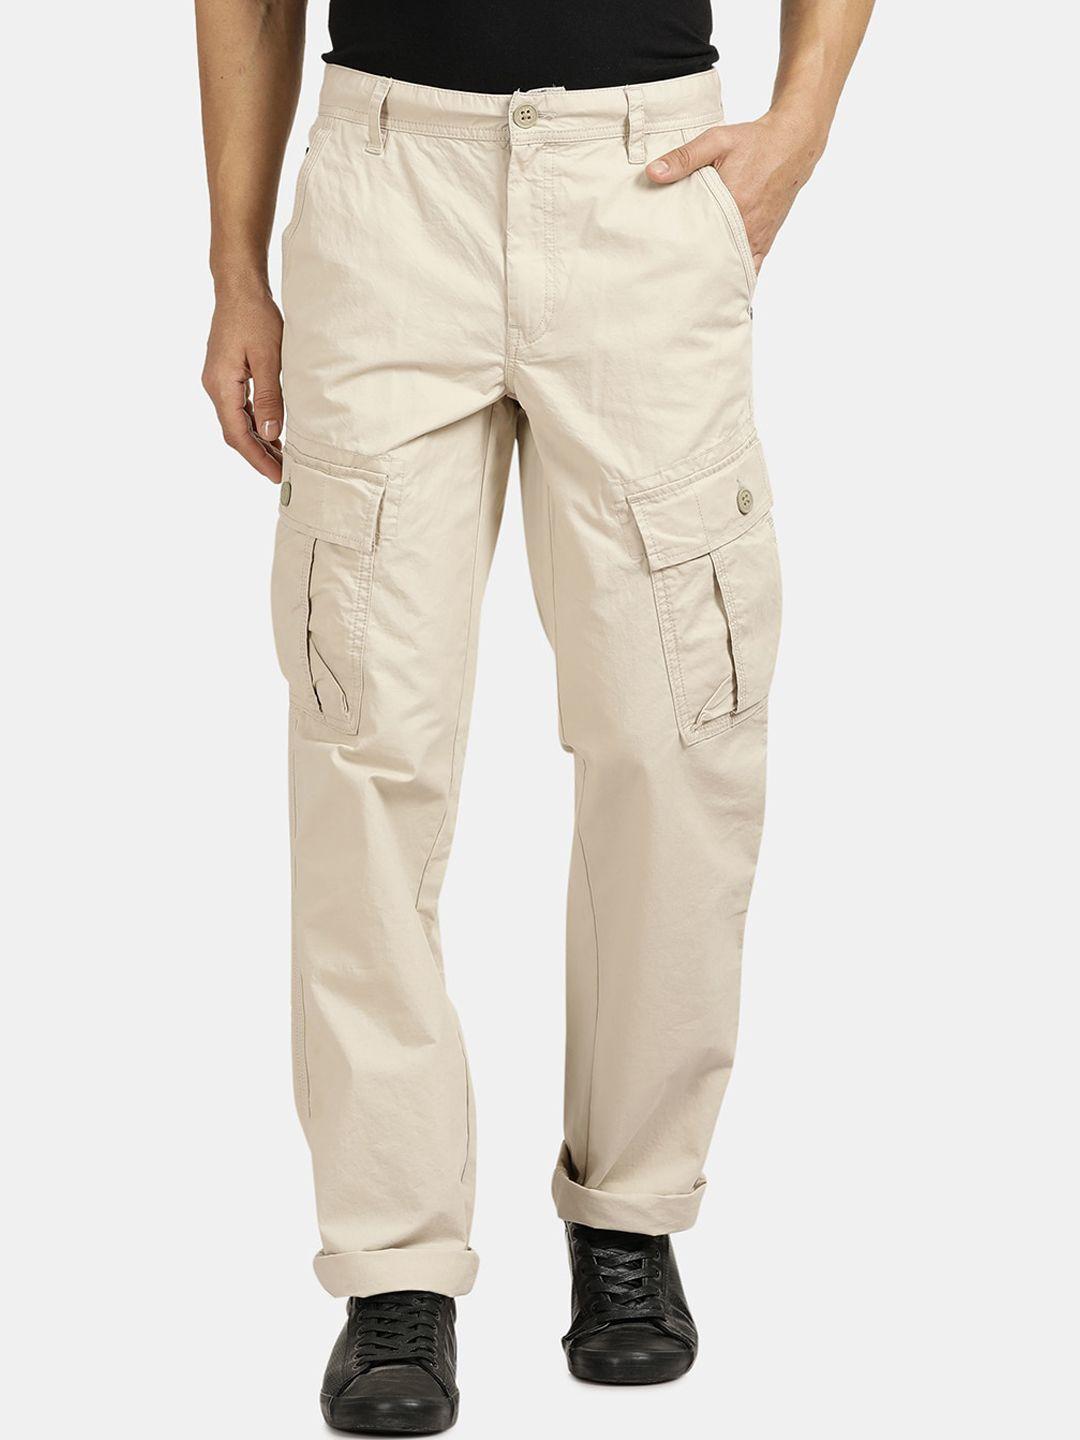 t-base-men-cotton-cargos-trousers